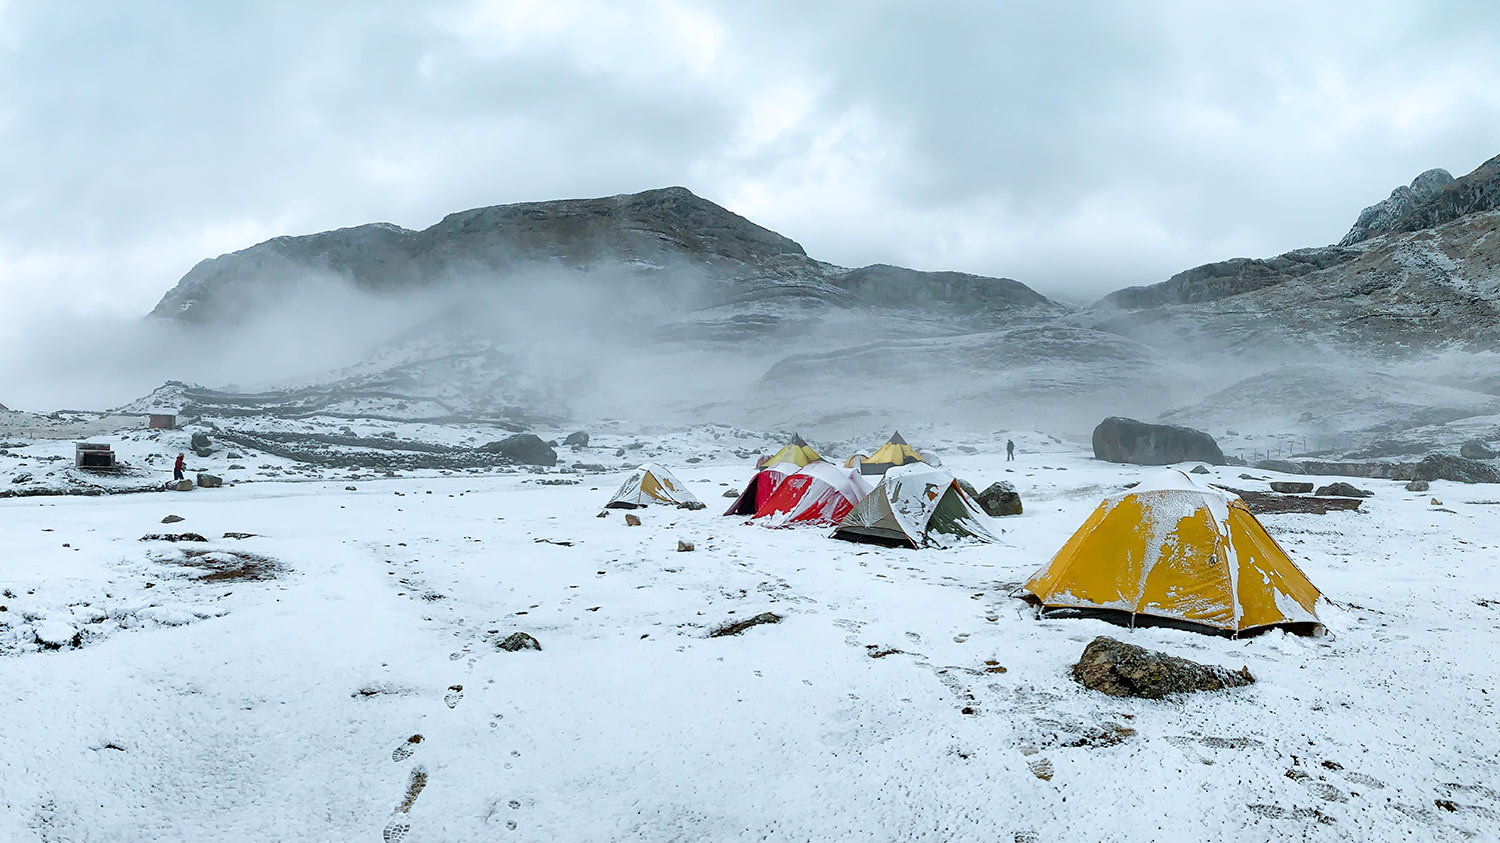 Neige, Tentes, Cordillera Huayhuash, Pérou / Snow, Tents, Cordillera Huayhuash, Peru